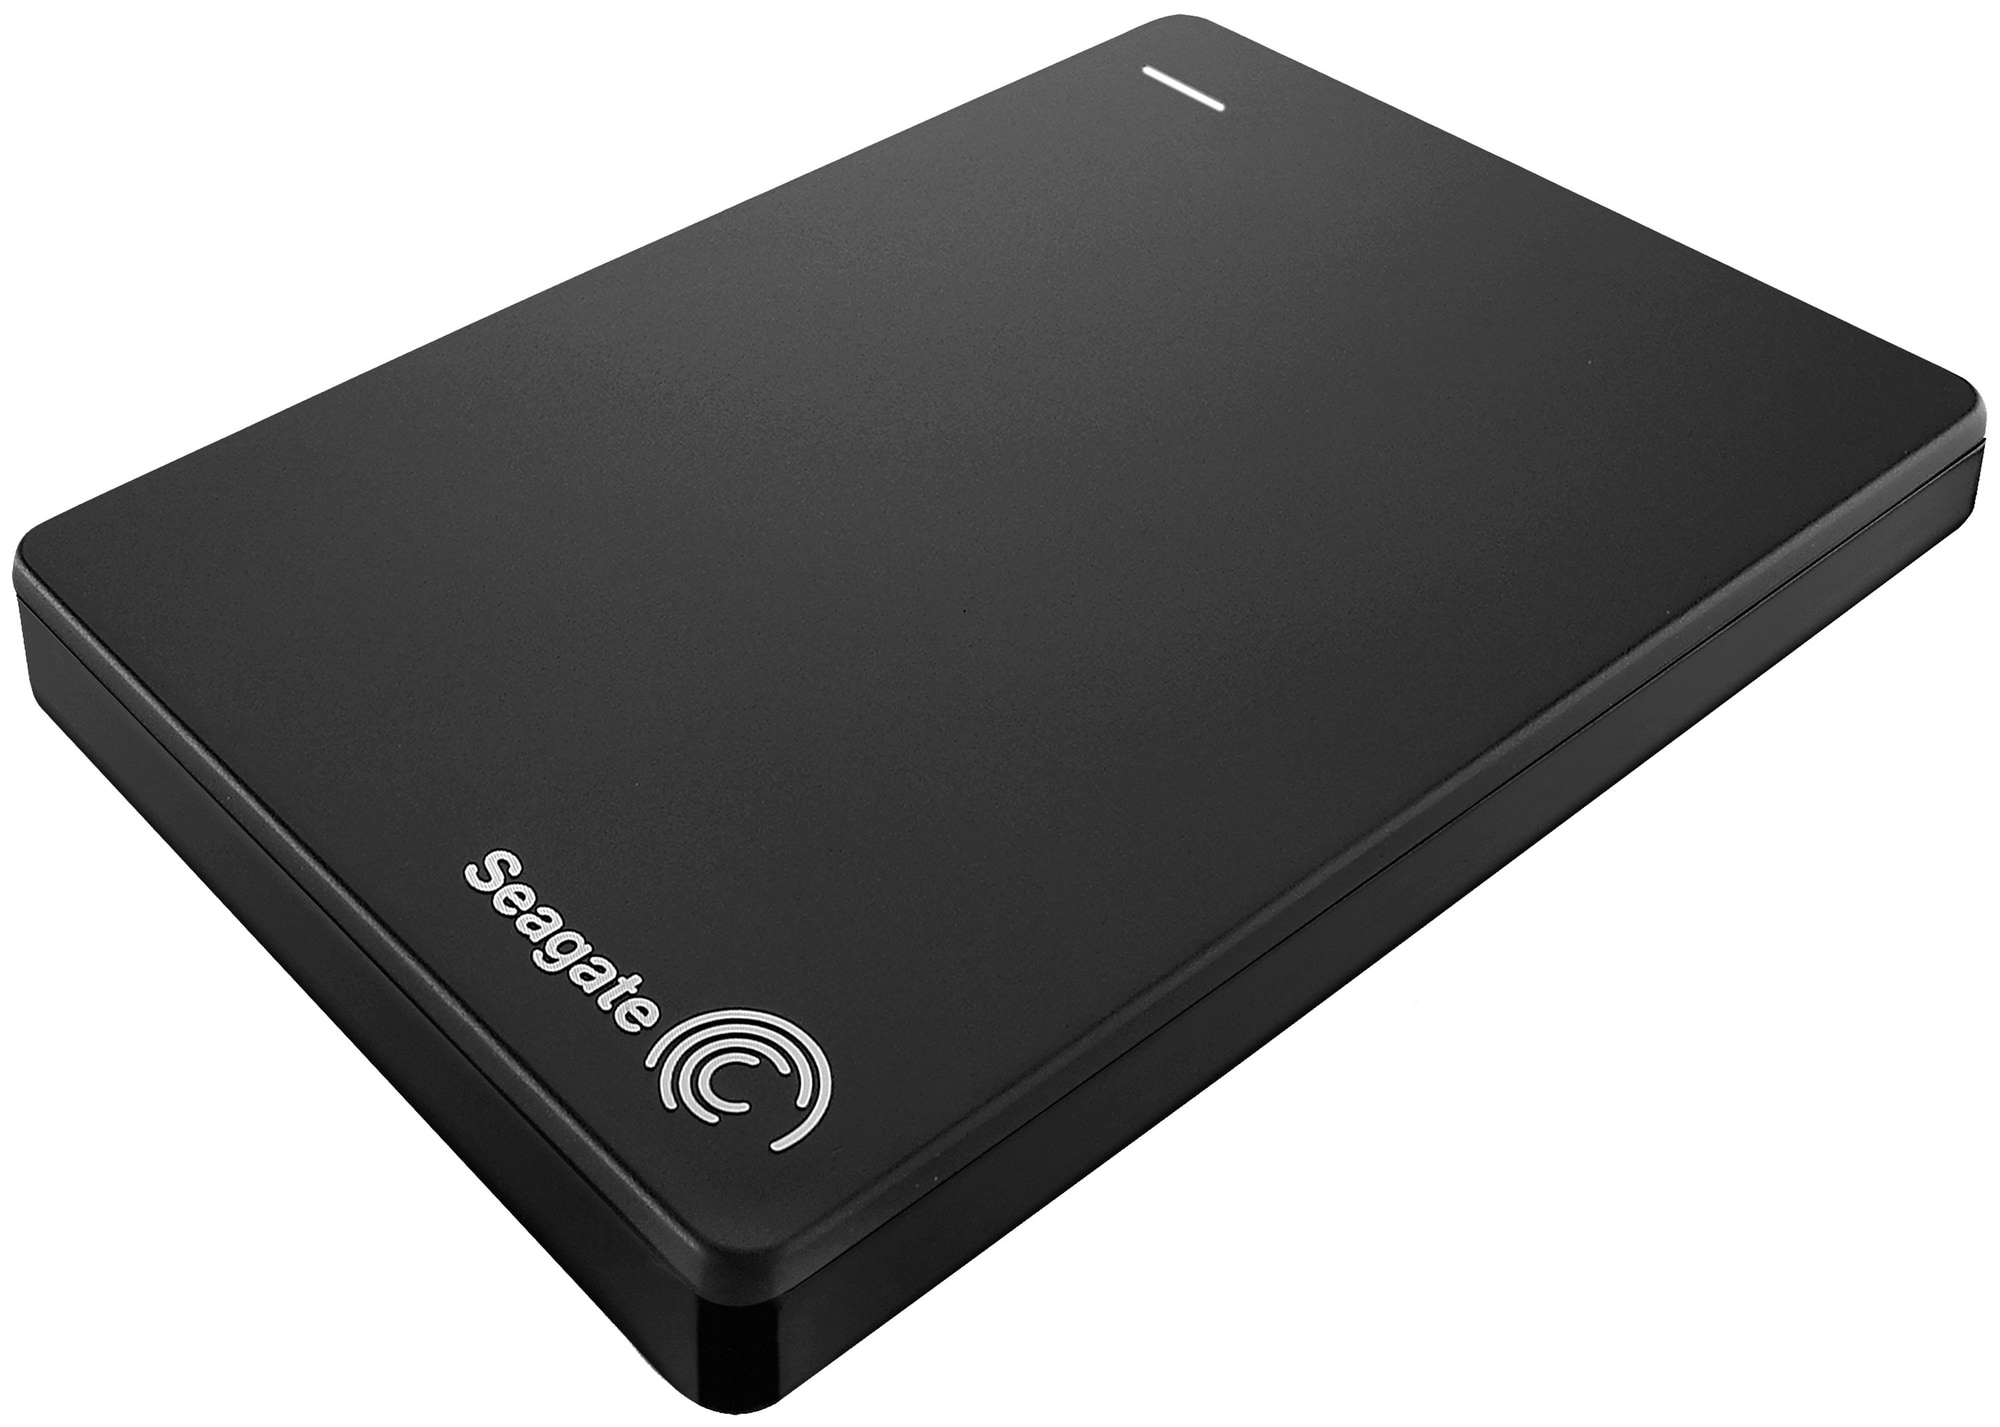 Seagate Slim Backup Plus 2 TB ekstern harddisk - sort | Elgiganten